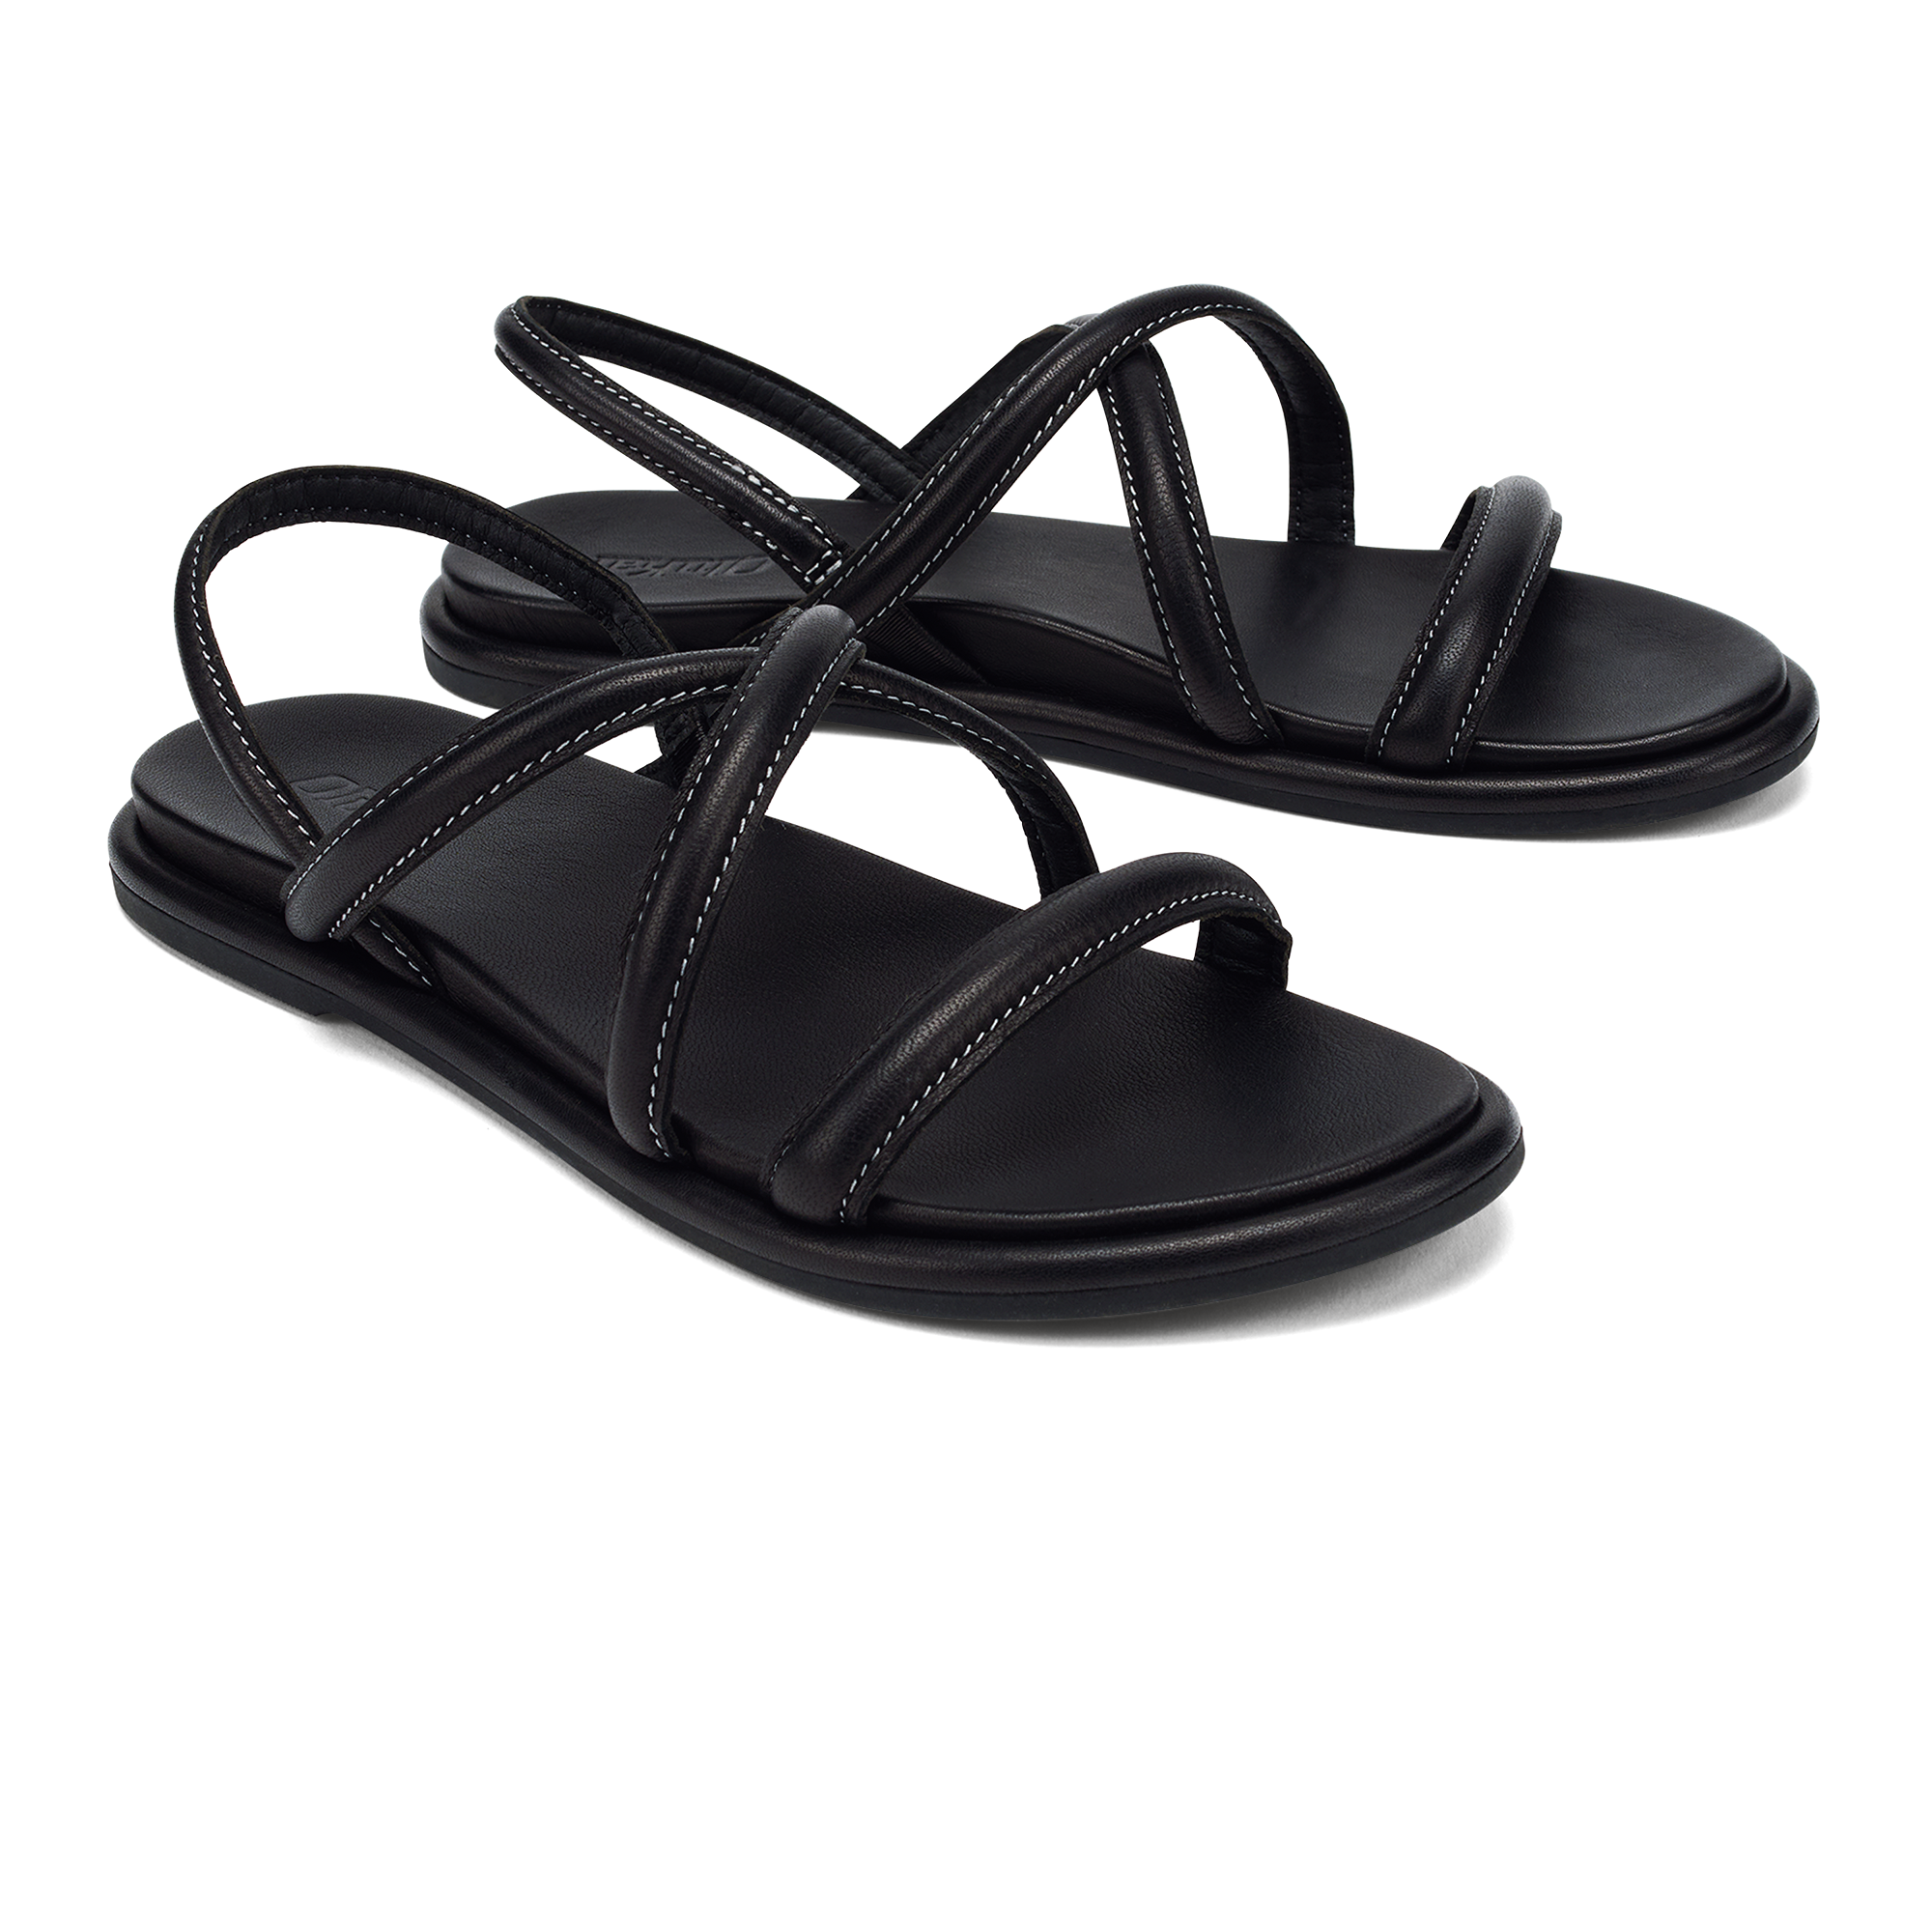 Buy PharmEasy Diabetic & Orthopedic women sandals (Fahion Range-2) Brown  Color, size 4 at Amazon.in